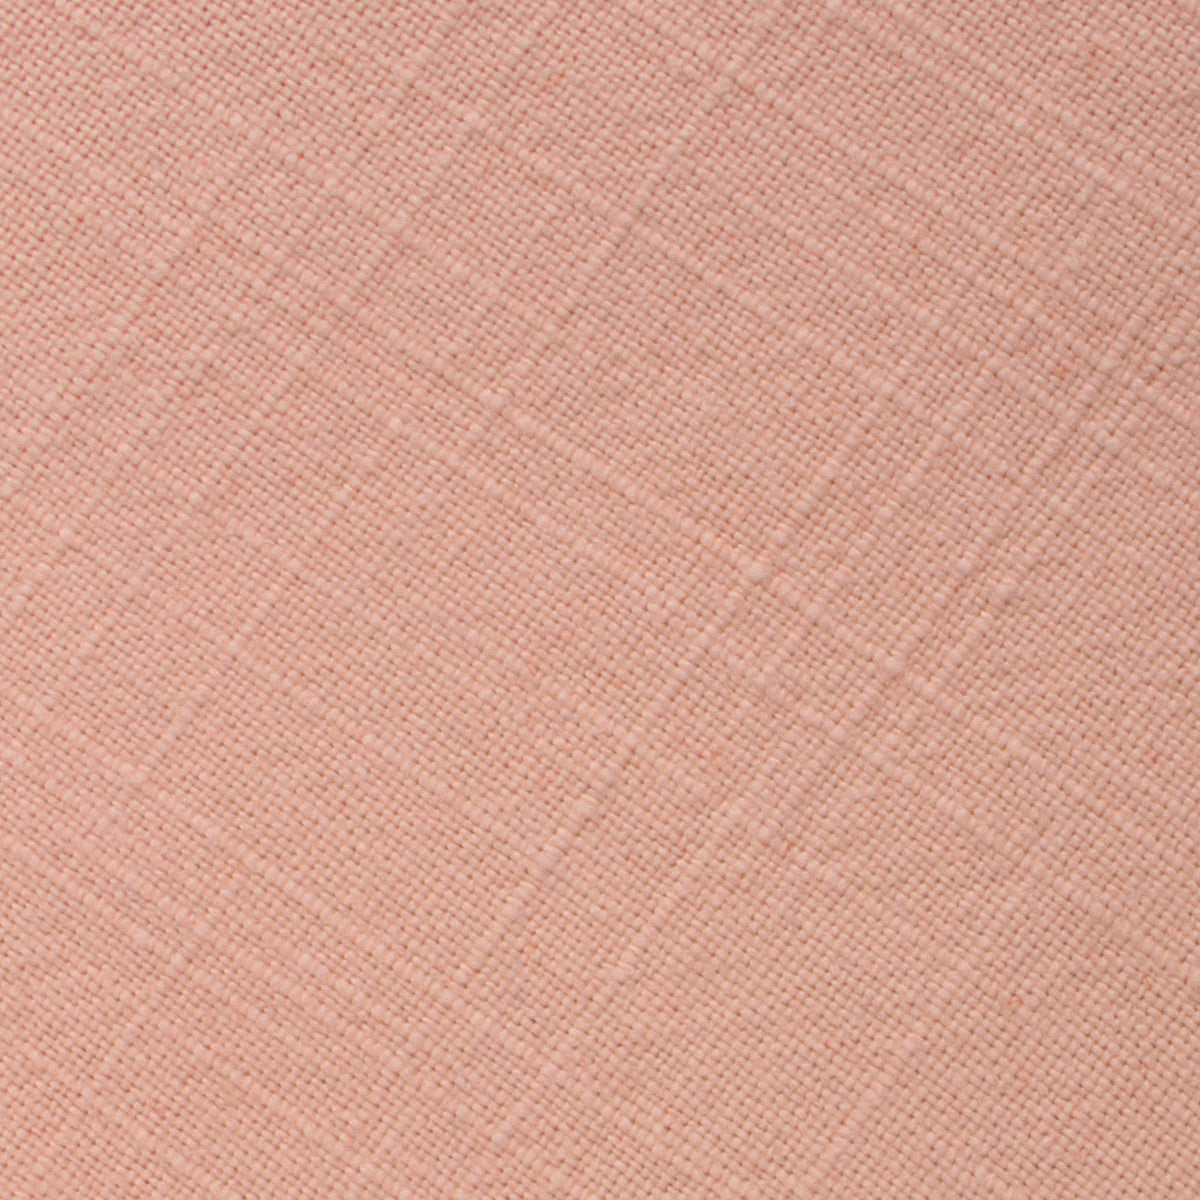 Paris Blush Pink Textured Vintage Linen Bow Tie Fabric